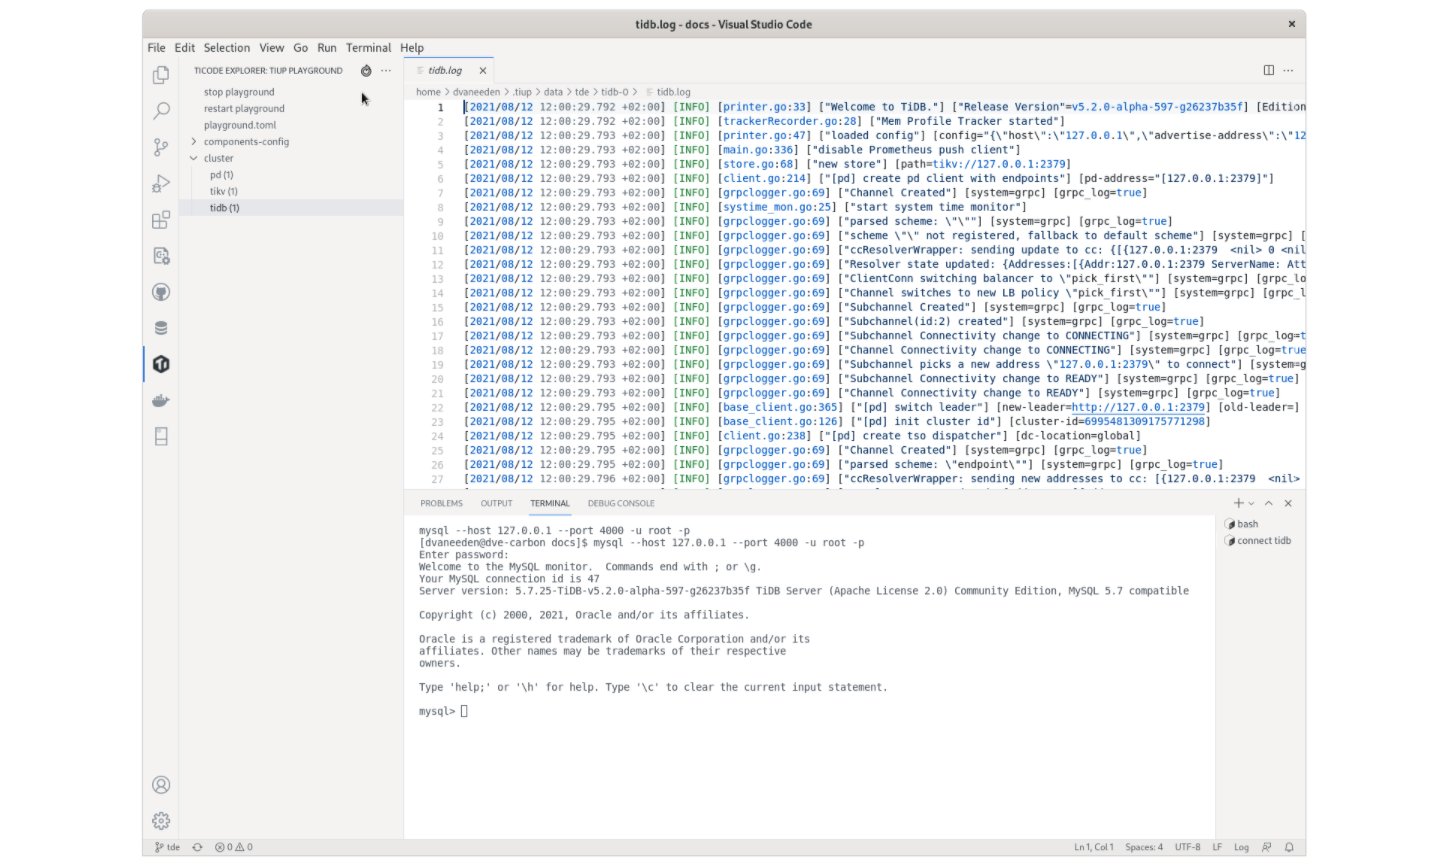 TiDE showing a MySQL prompt and logging